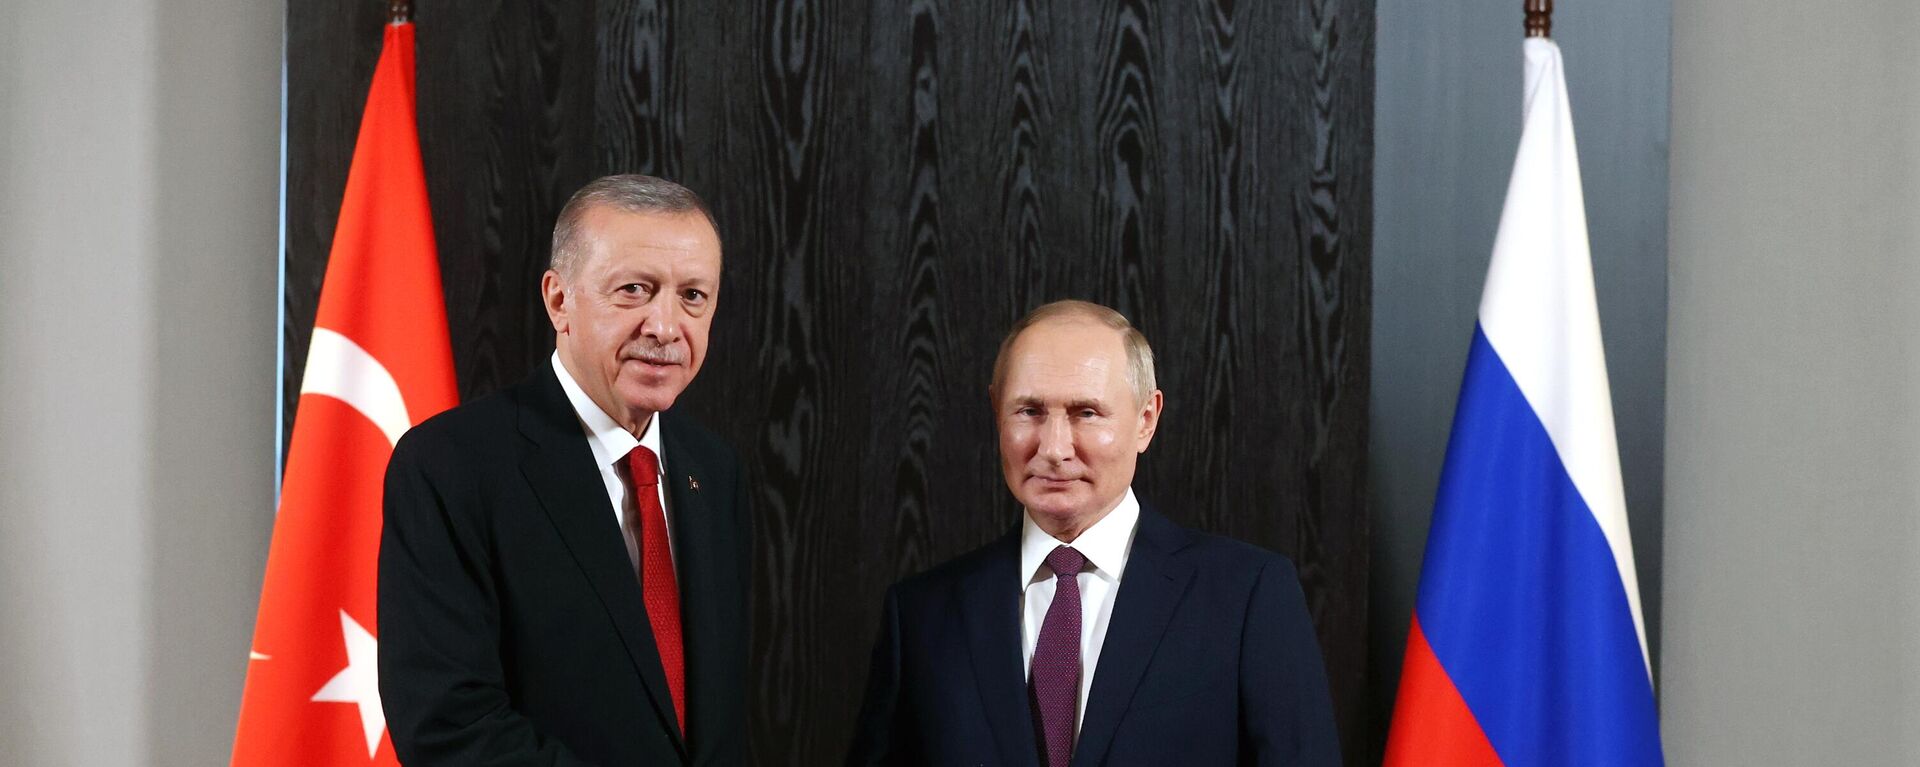 El presidente turco, Recep Tayyip Erdogan, y el presidente ruso, Vladímir Putin - Sputnik Mundo, 1920, 01.11.2022